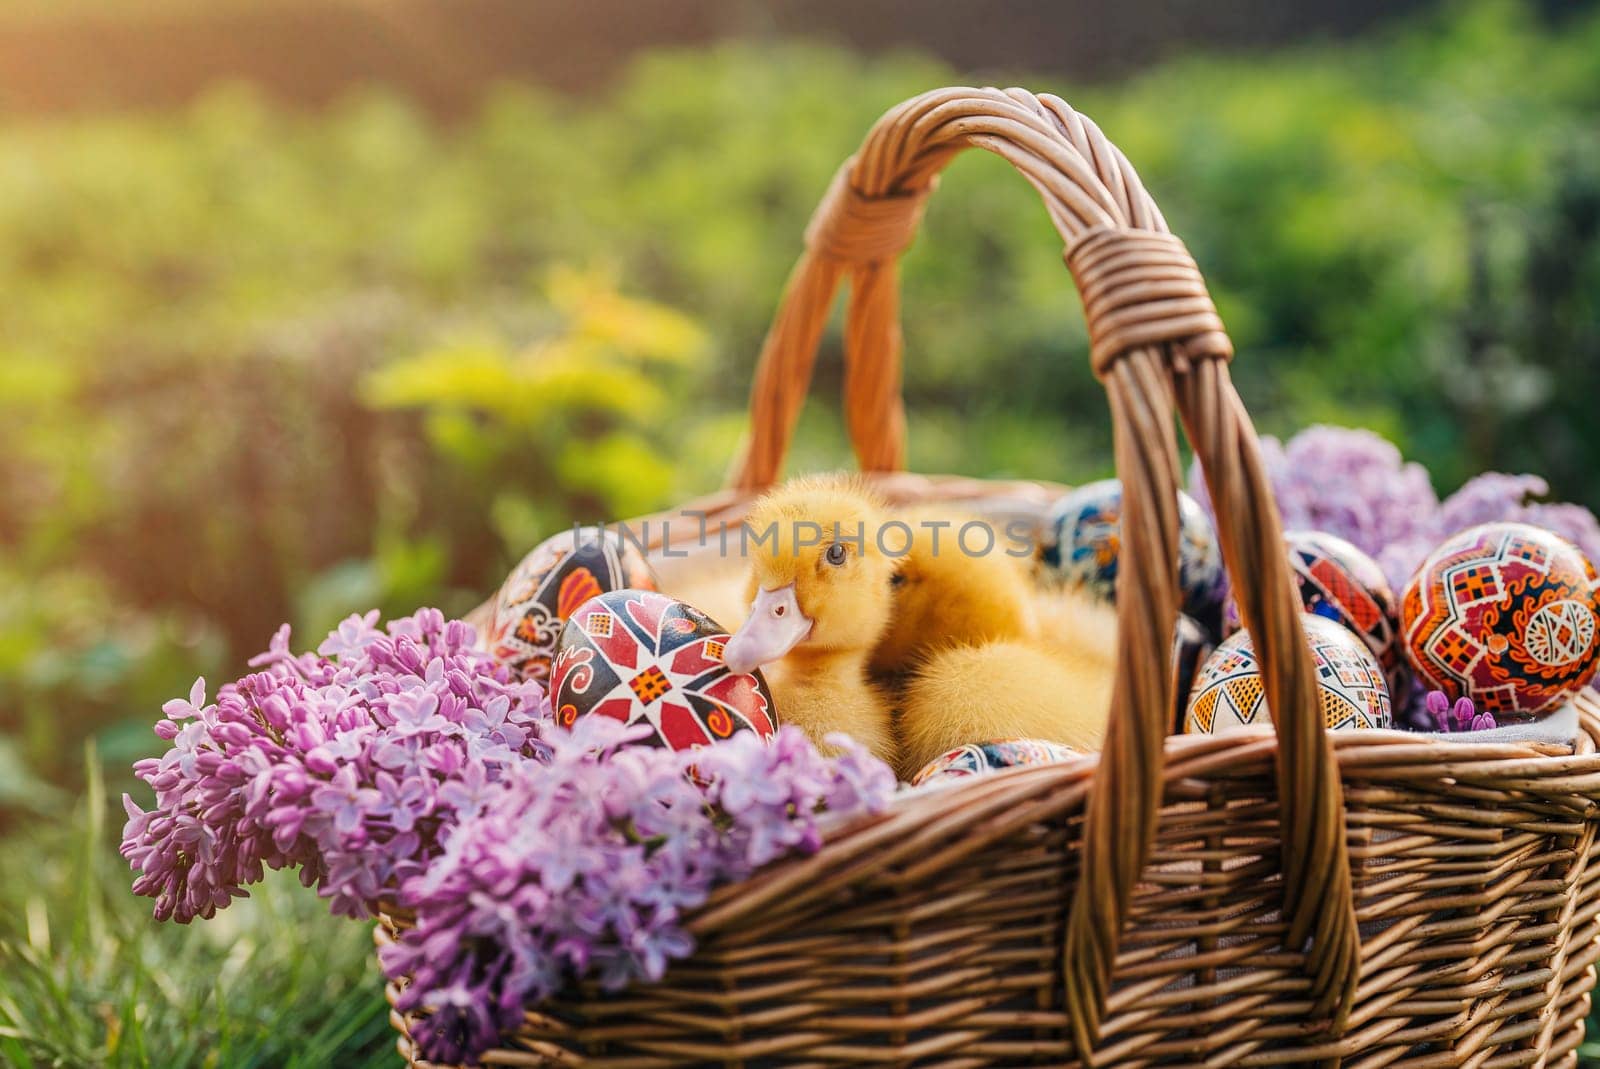 Cute little ducklings sitting with pysanka eggs n basket, lilac flowers bouquet by kristina_kokhanova